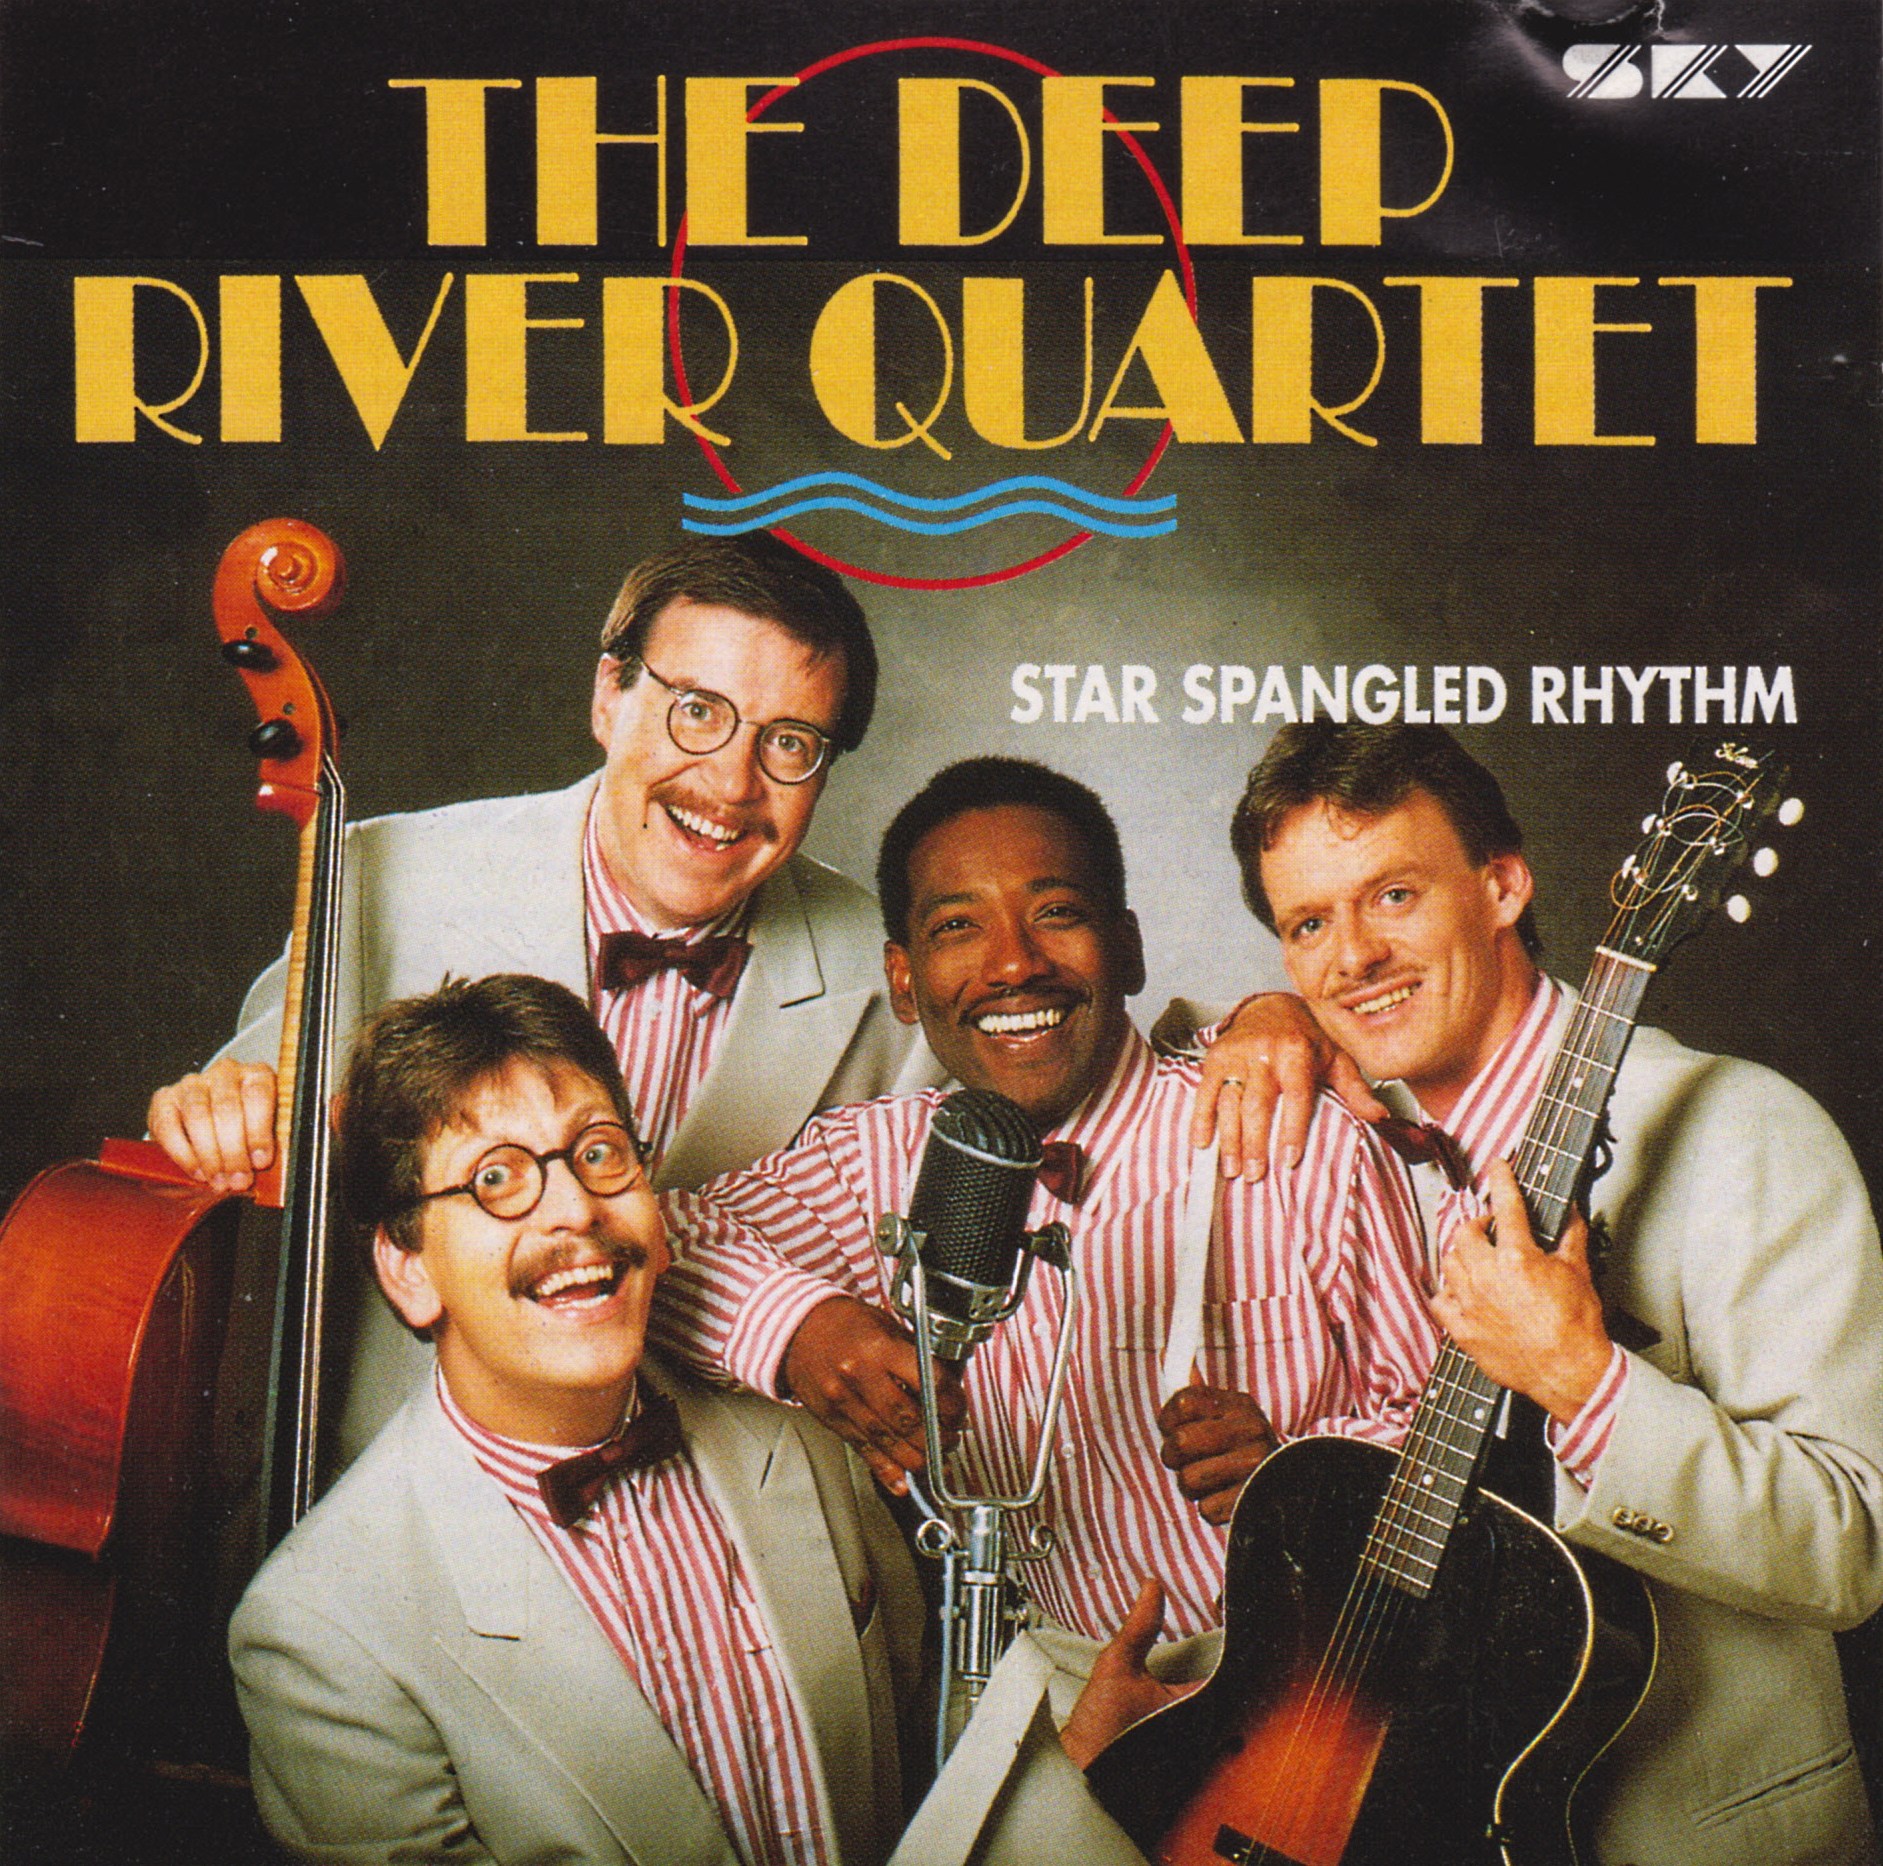 The Deep River Quartet - Star Spangled Rhythm in DTS-wav (op verzoek)